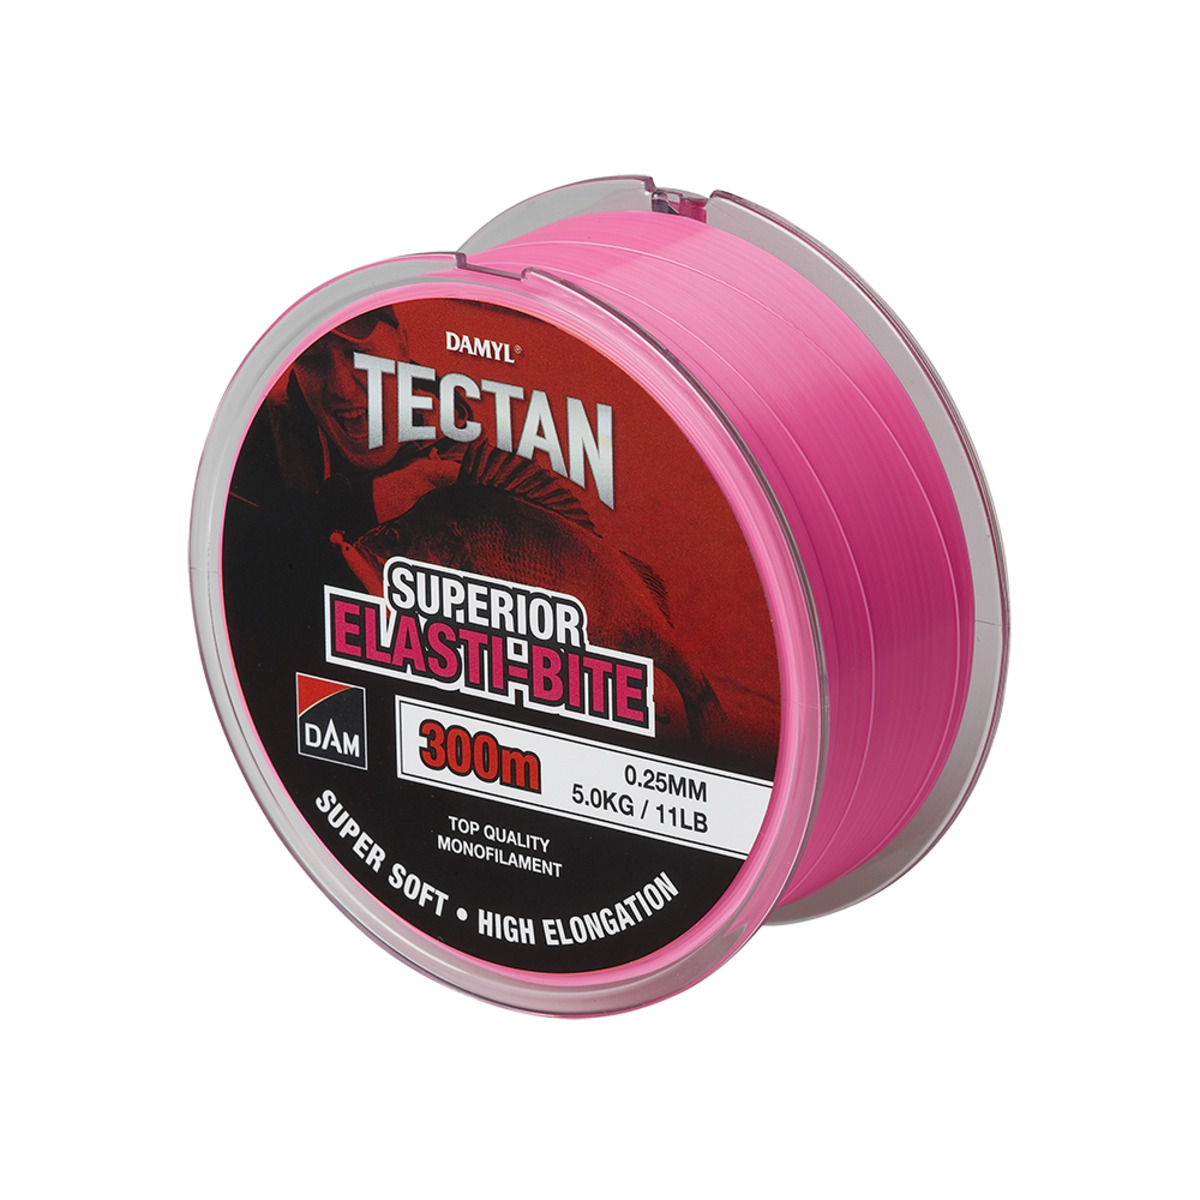 Dam Tectan Superior Elasti-bite 300m - 0.45MM 13.5KG 30LBS PINK